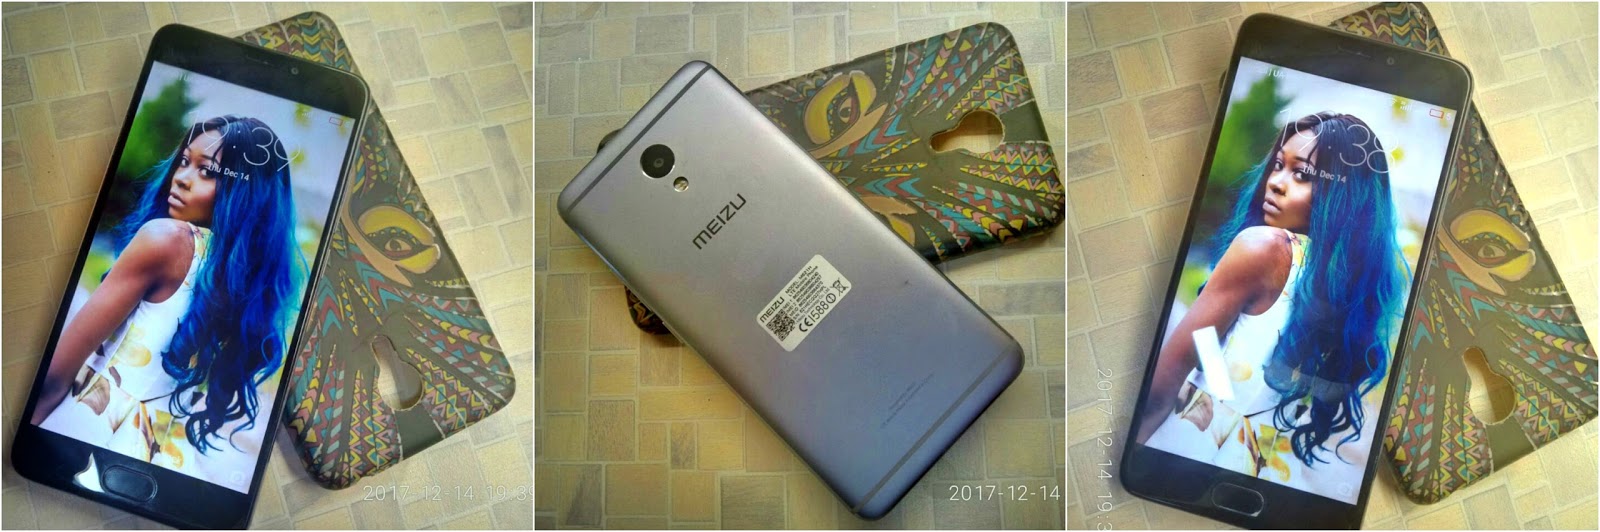 Meizu M5 Note review